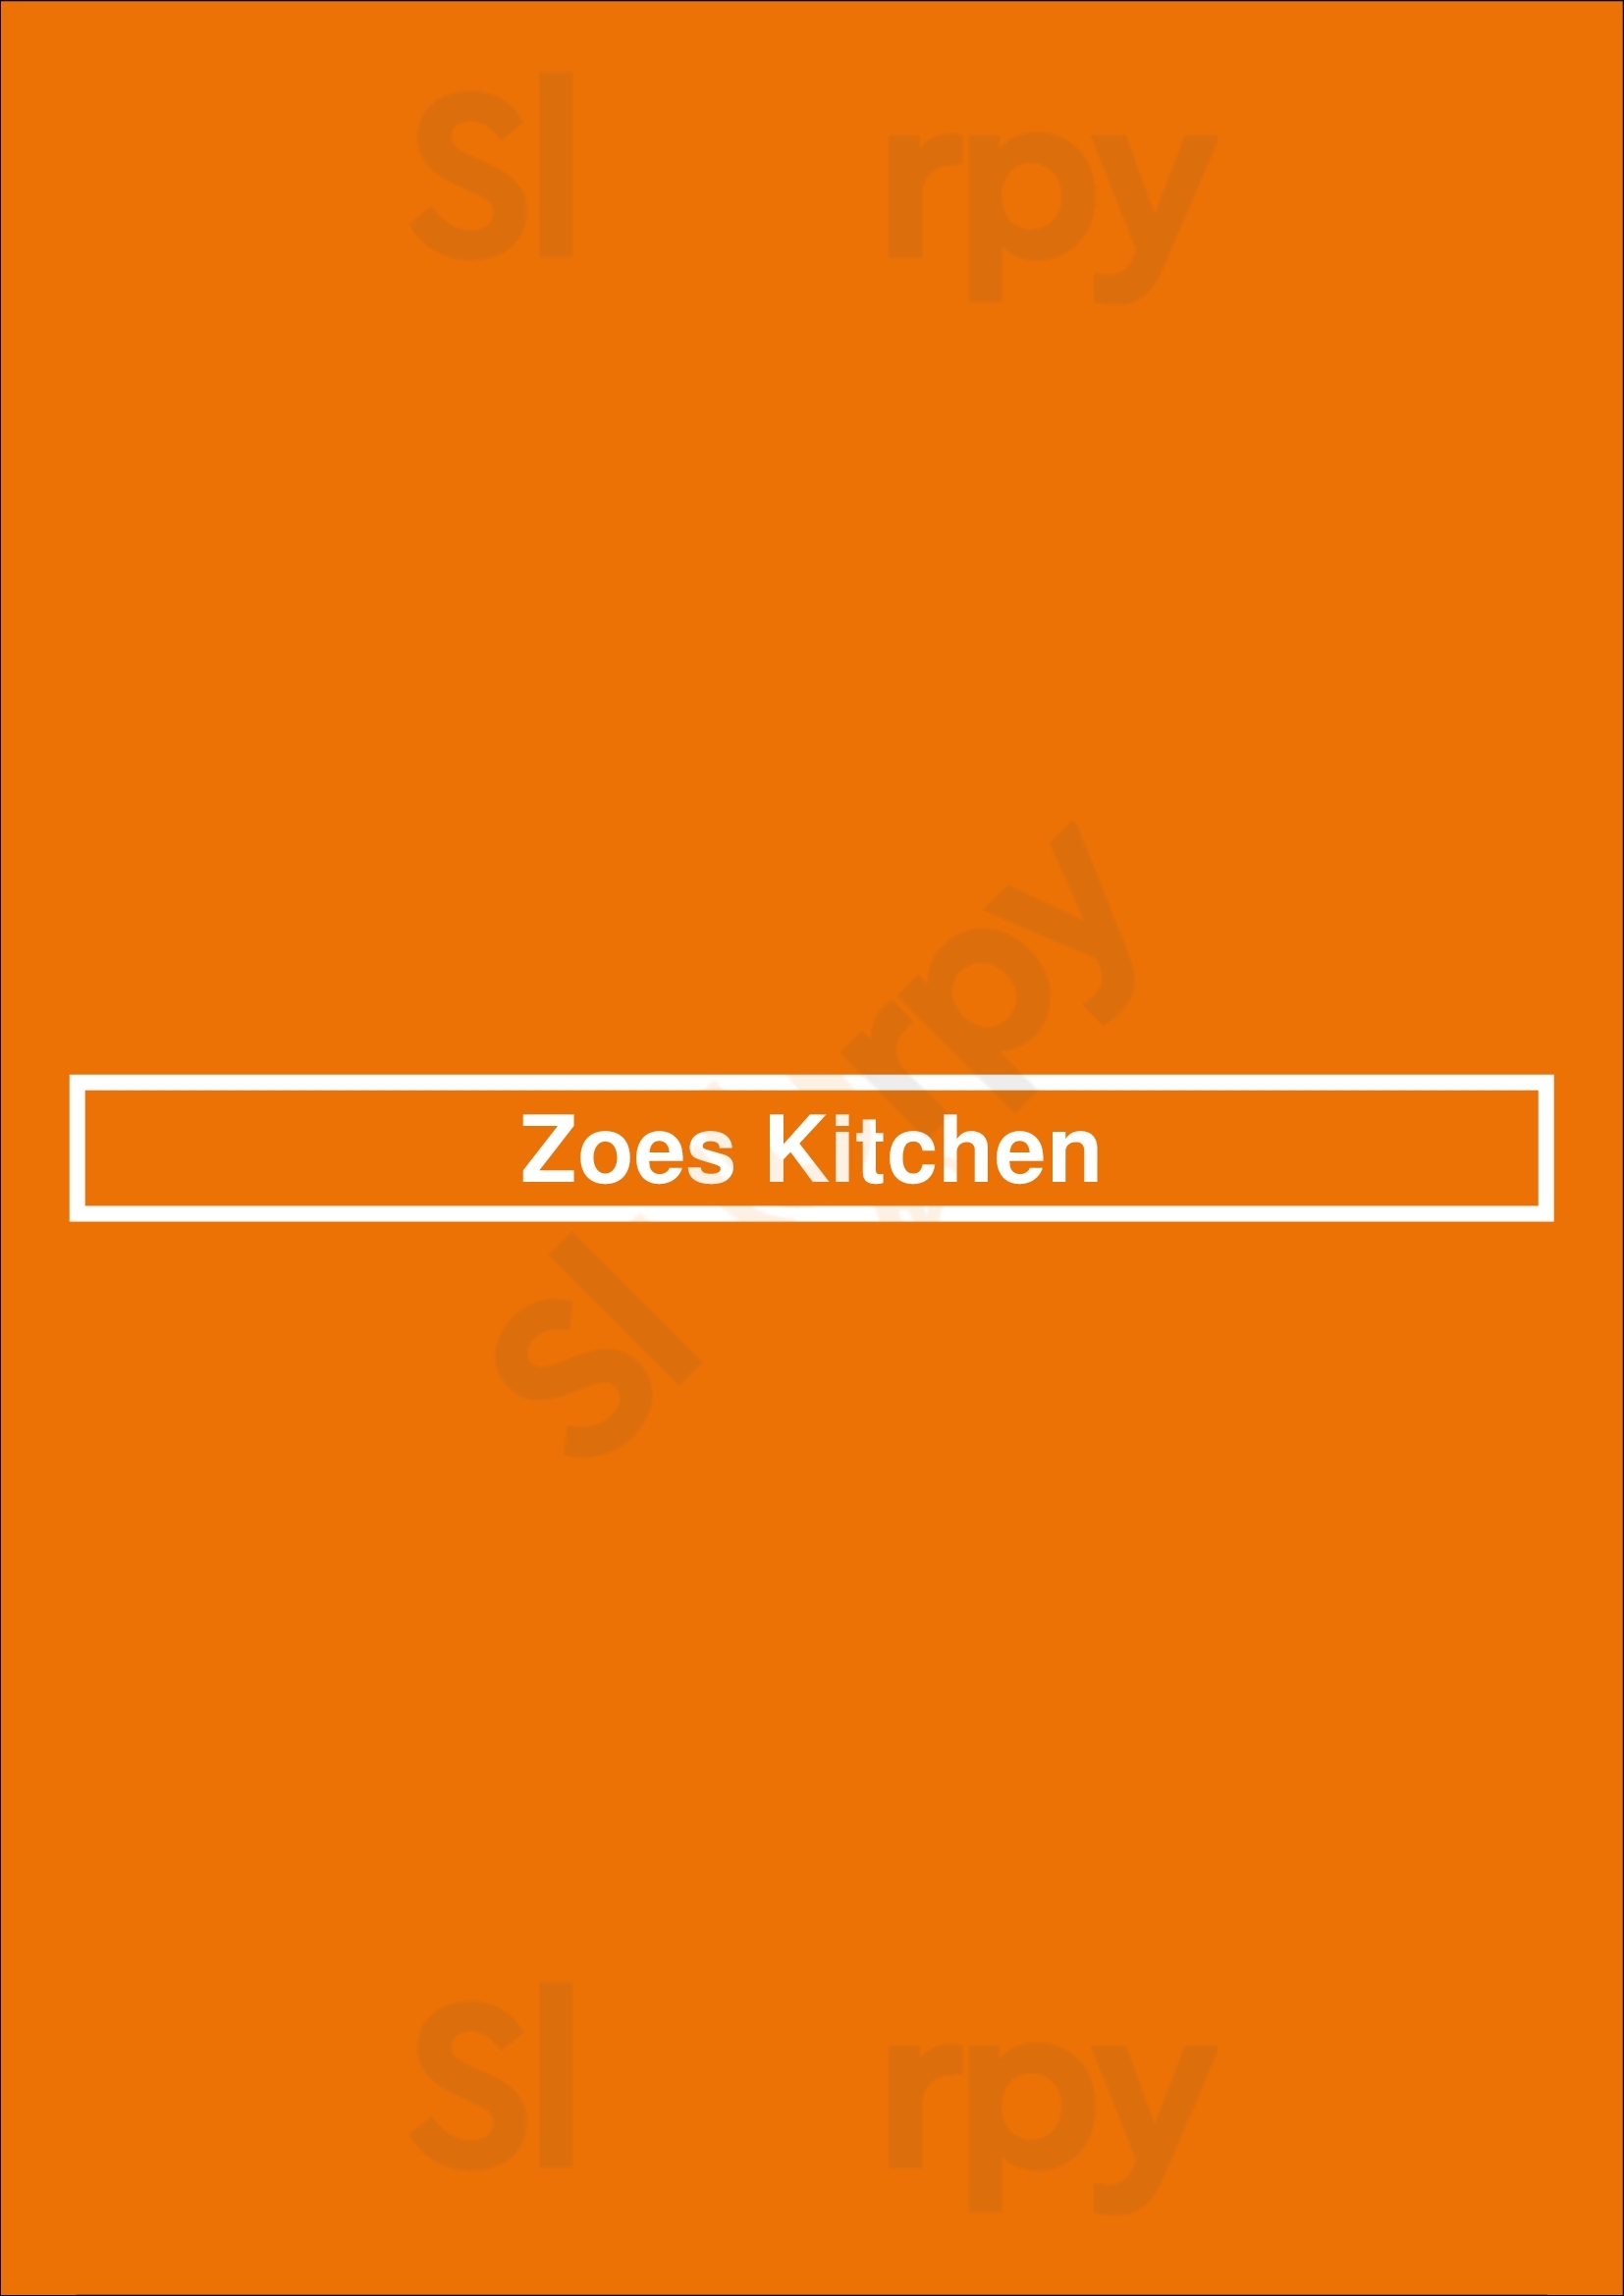 Zoes Kitchen Houston Menu - 1